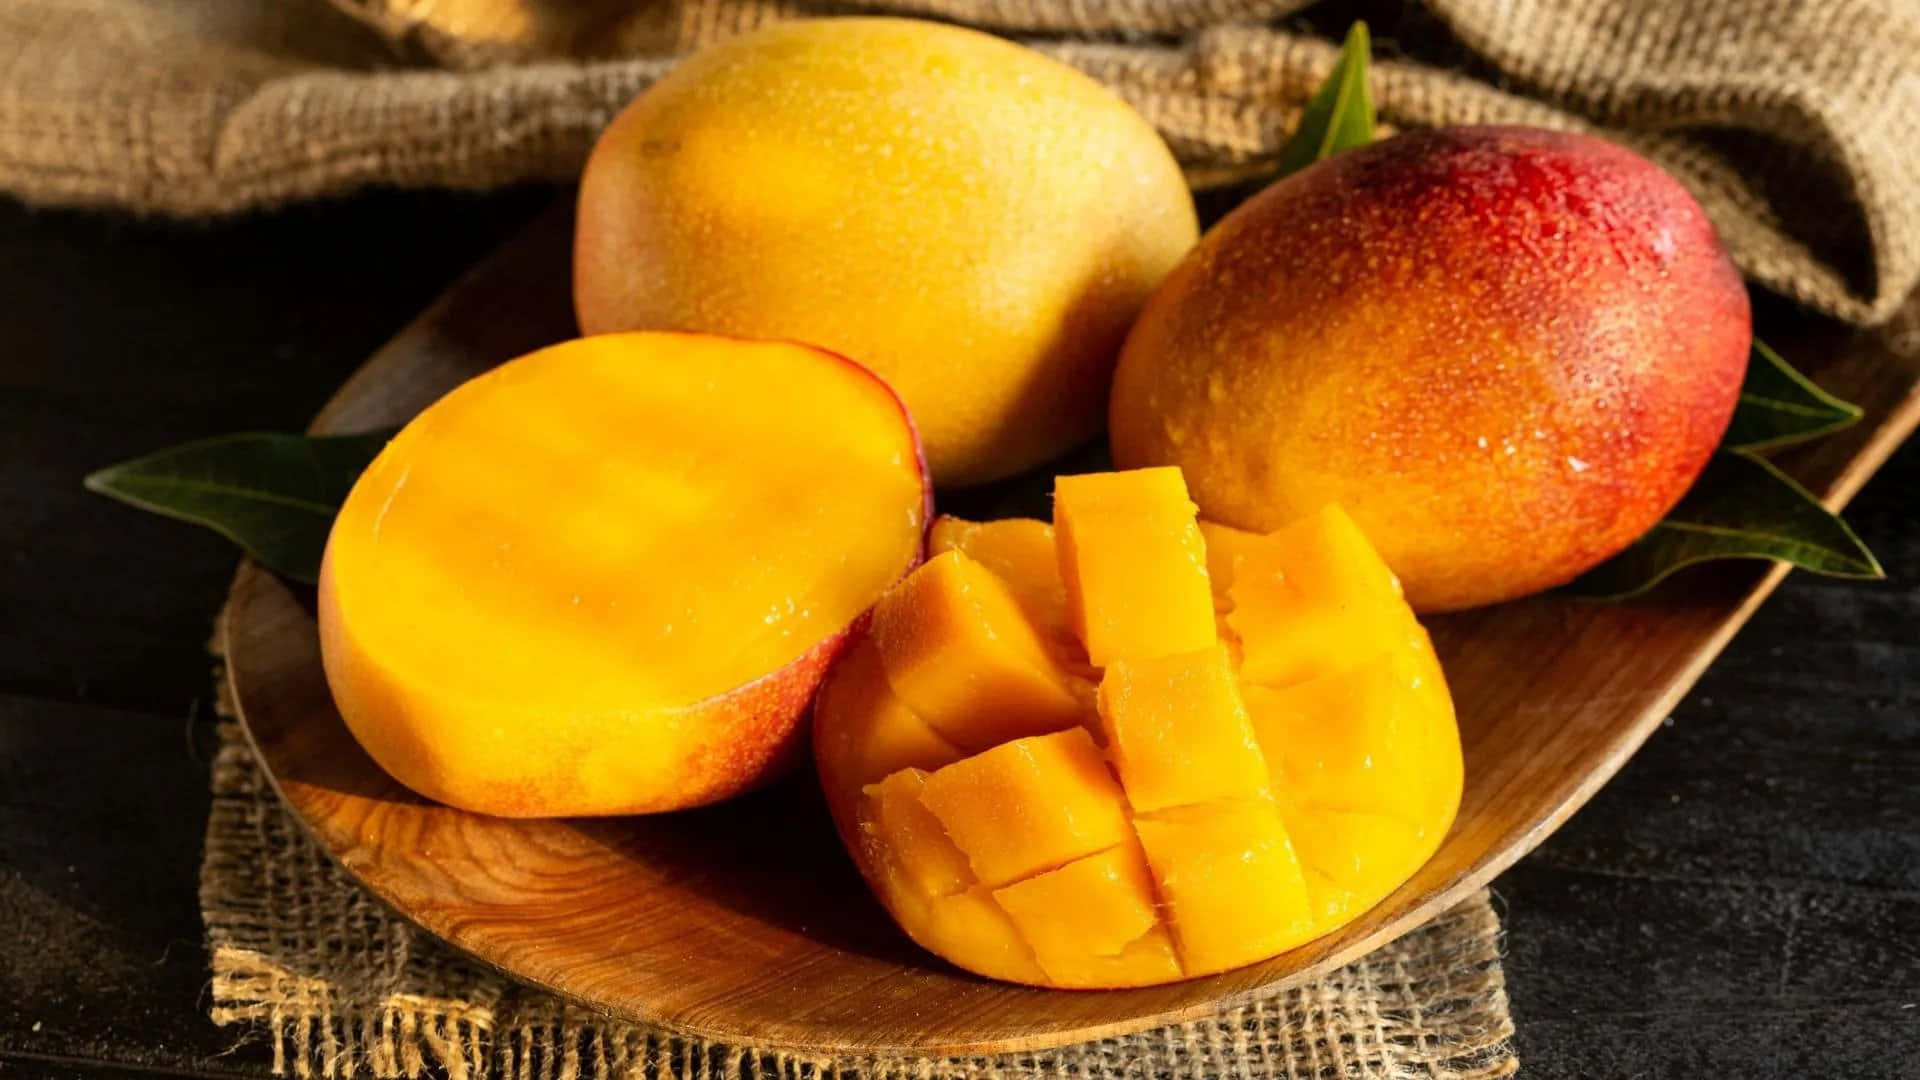 Enjoying a sweet, ripe Mango